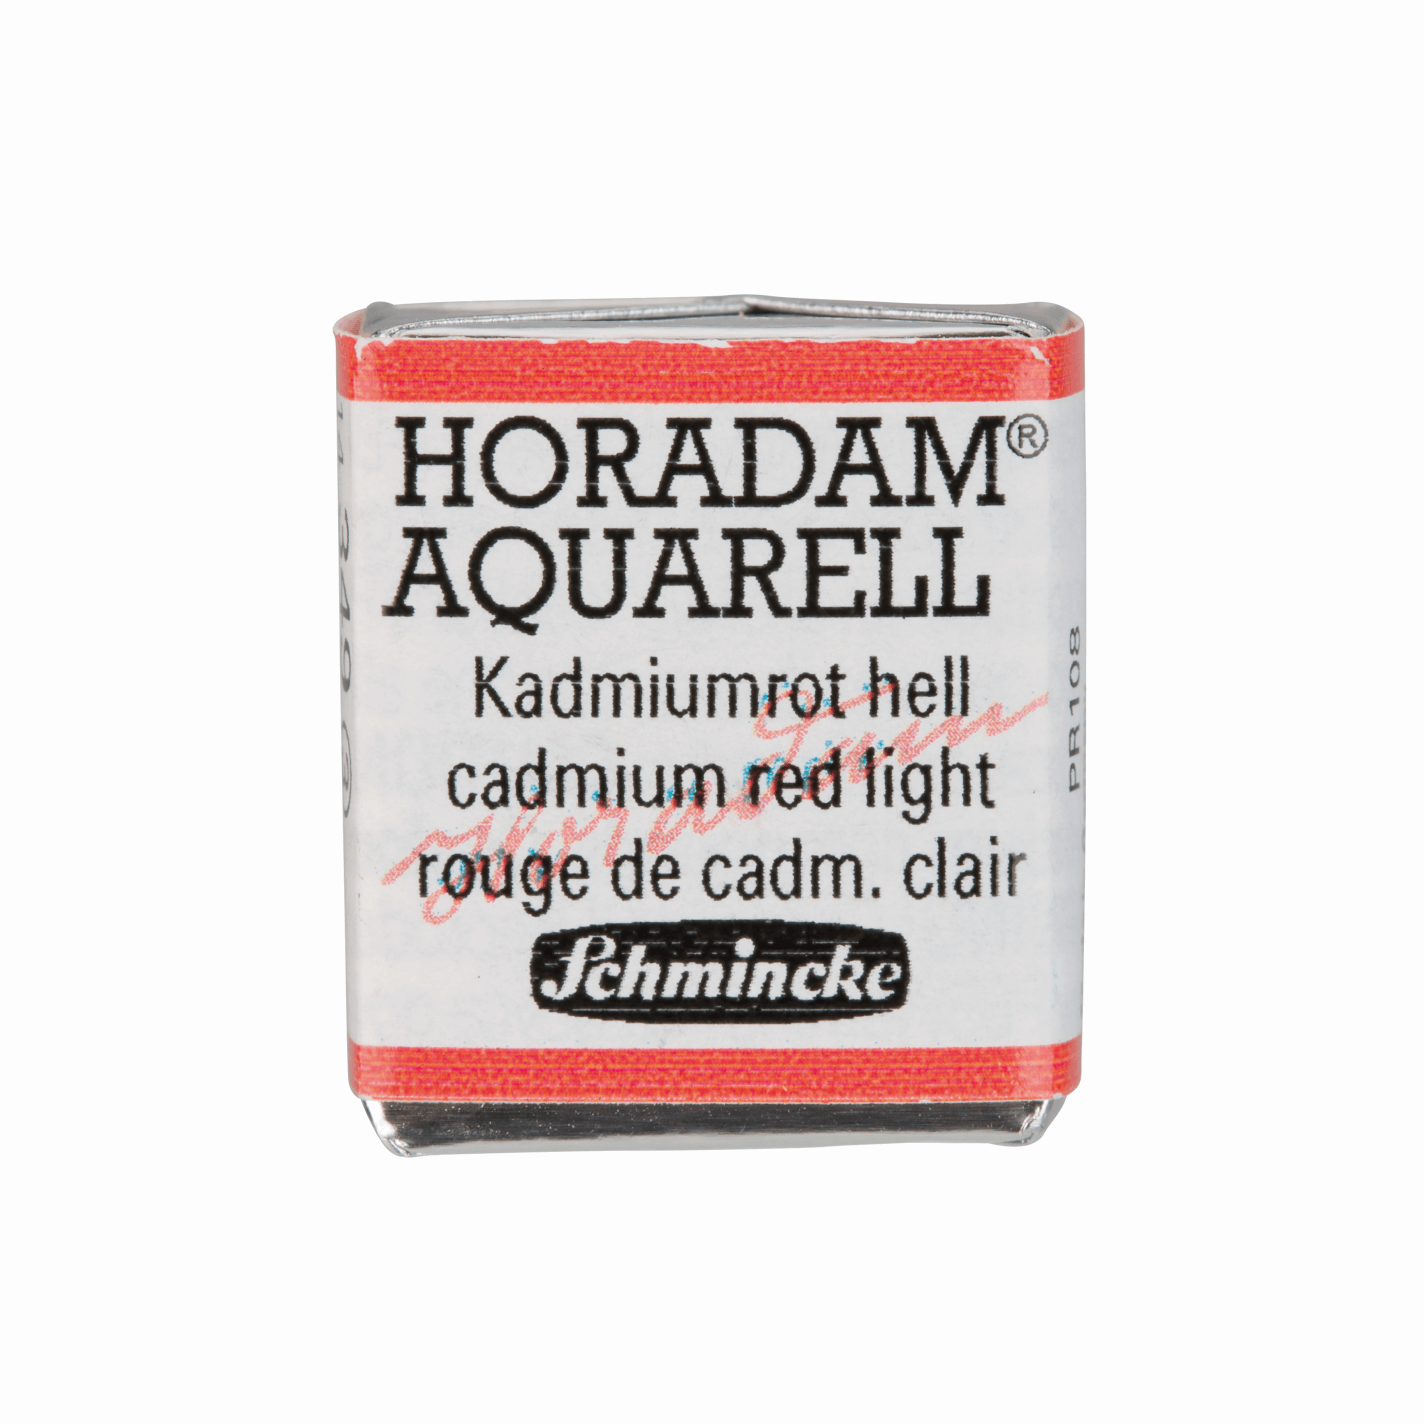 Schmincke Horadam Aquarell pans 1/2 pan Cadmium Red Light